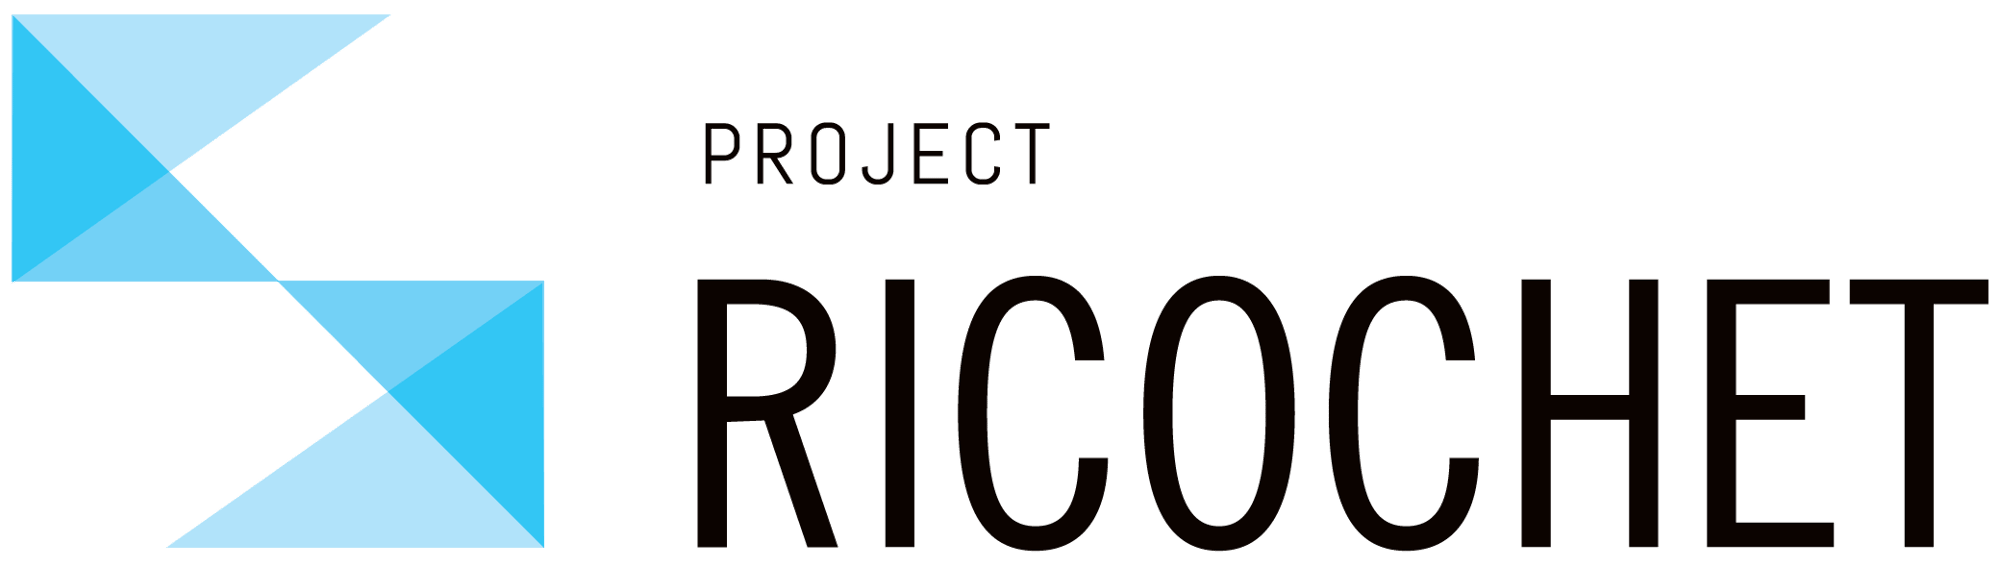 projectricochet_logo_hi_res_(1)